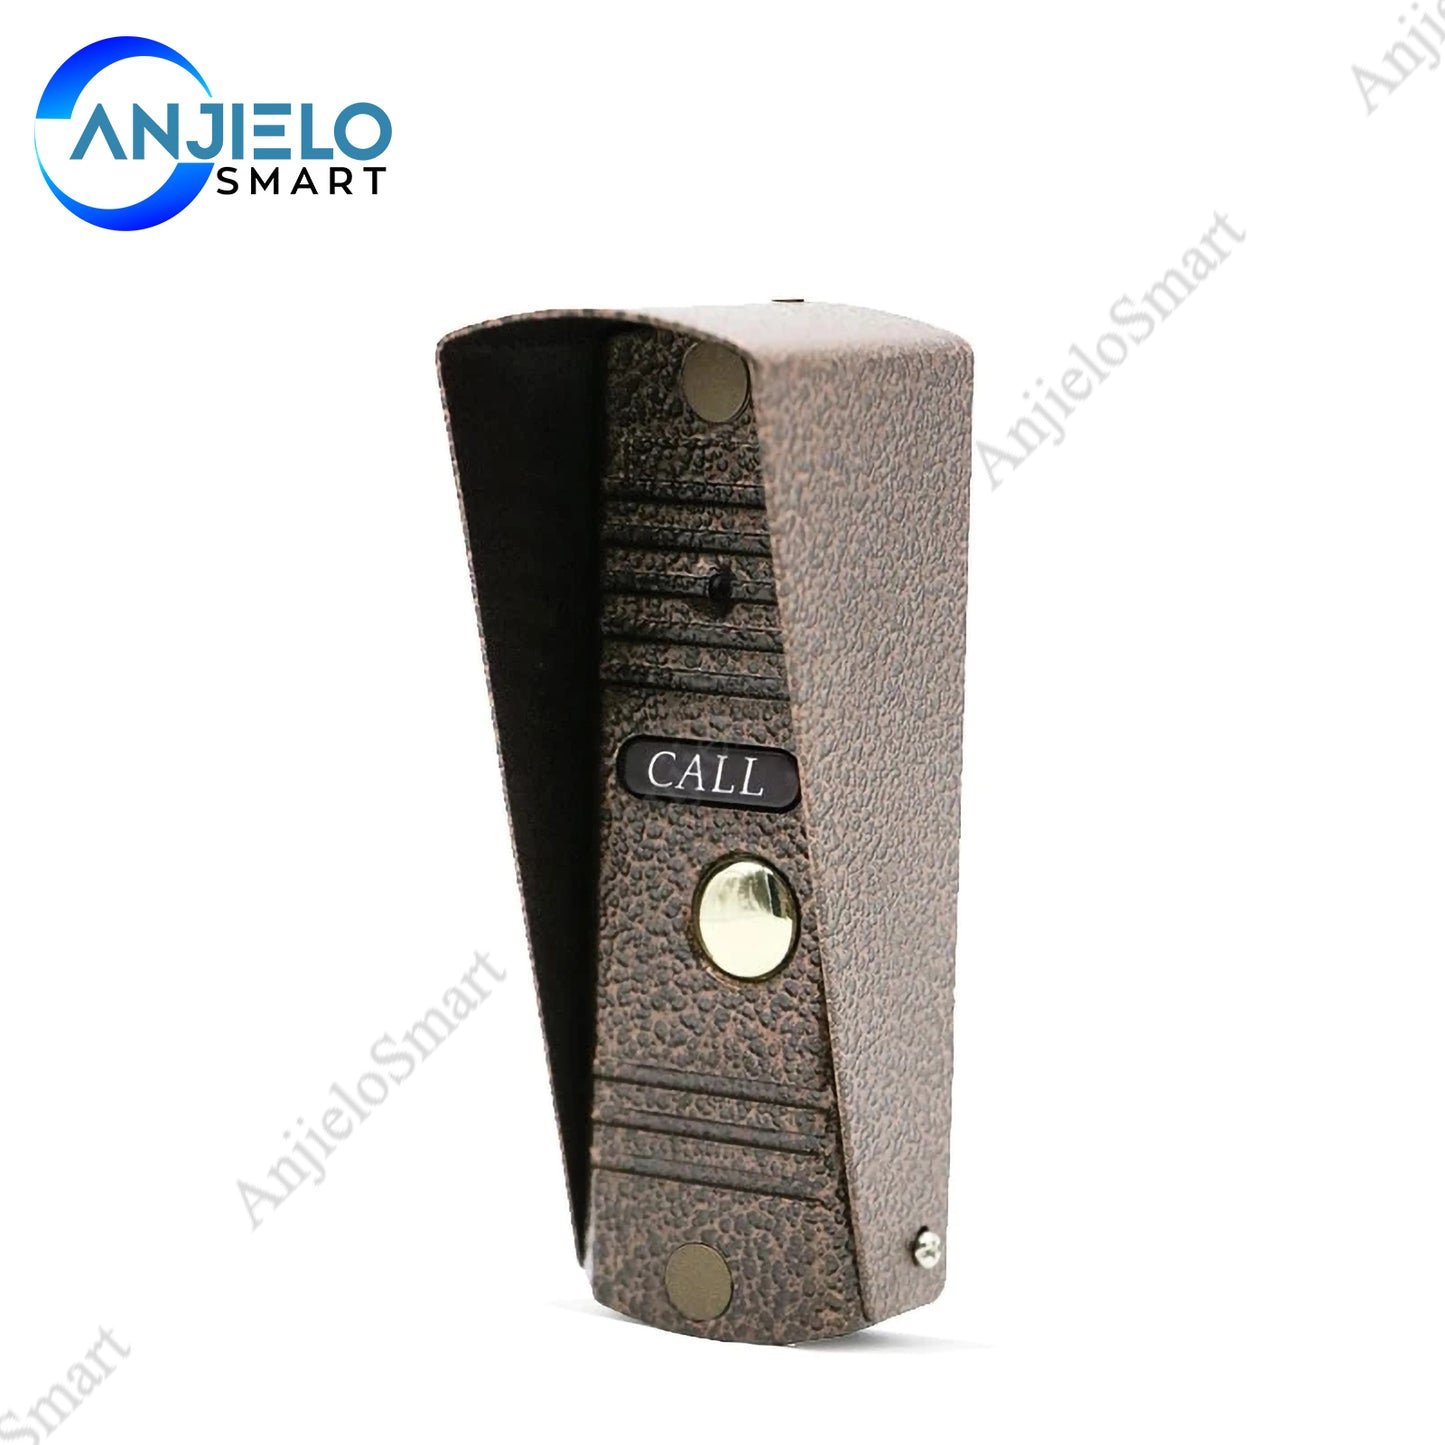 AnjieloSmart Doorbell Intercom Home Security IR Night Vision Outdoor Call Panel Wide Angle Lens